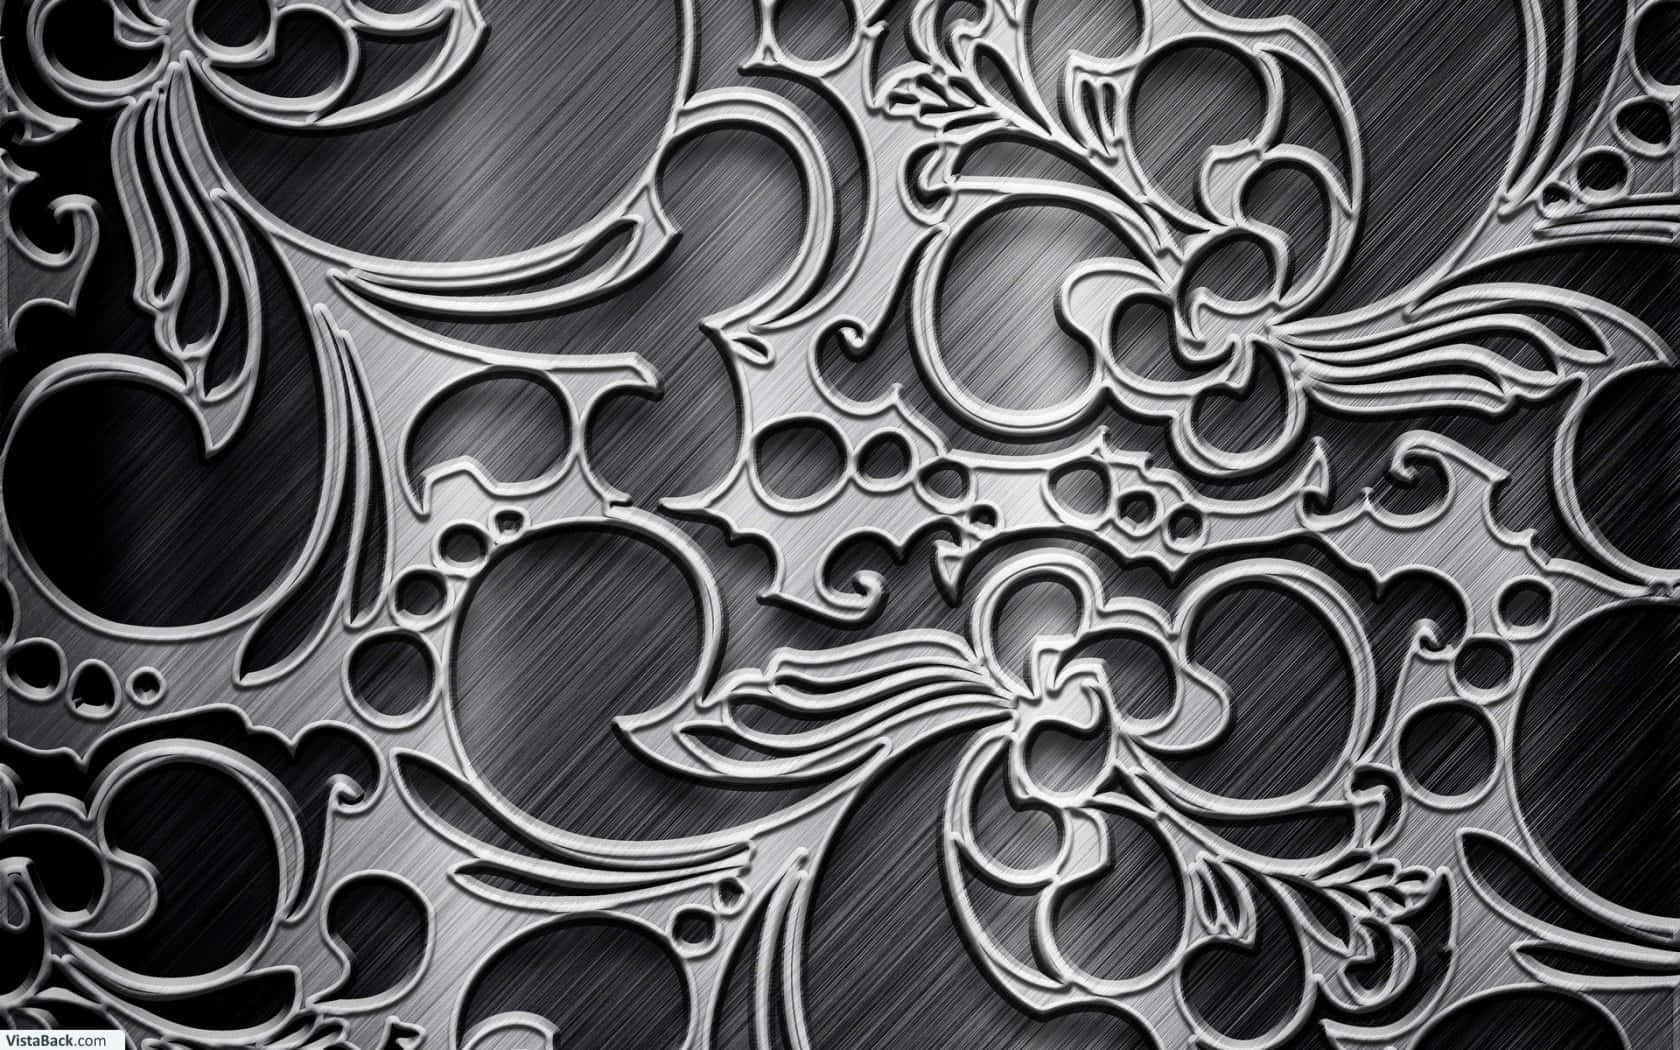 This glossy black metallic finish radiates a minimal yet captivating beauty. Wallpaper